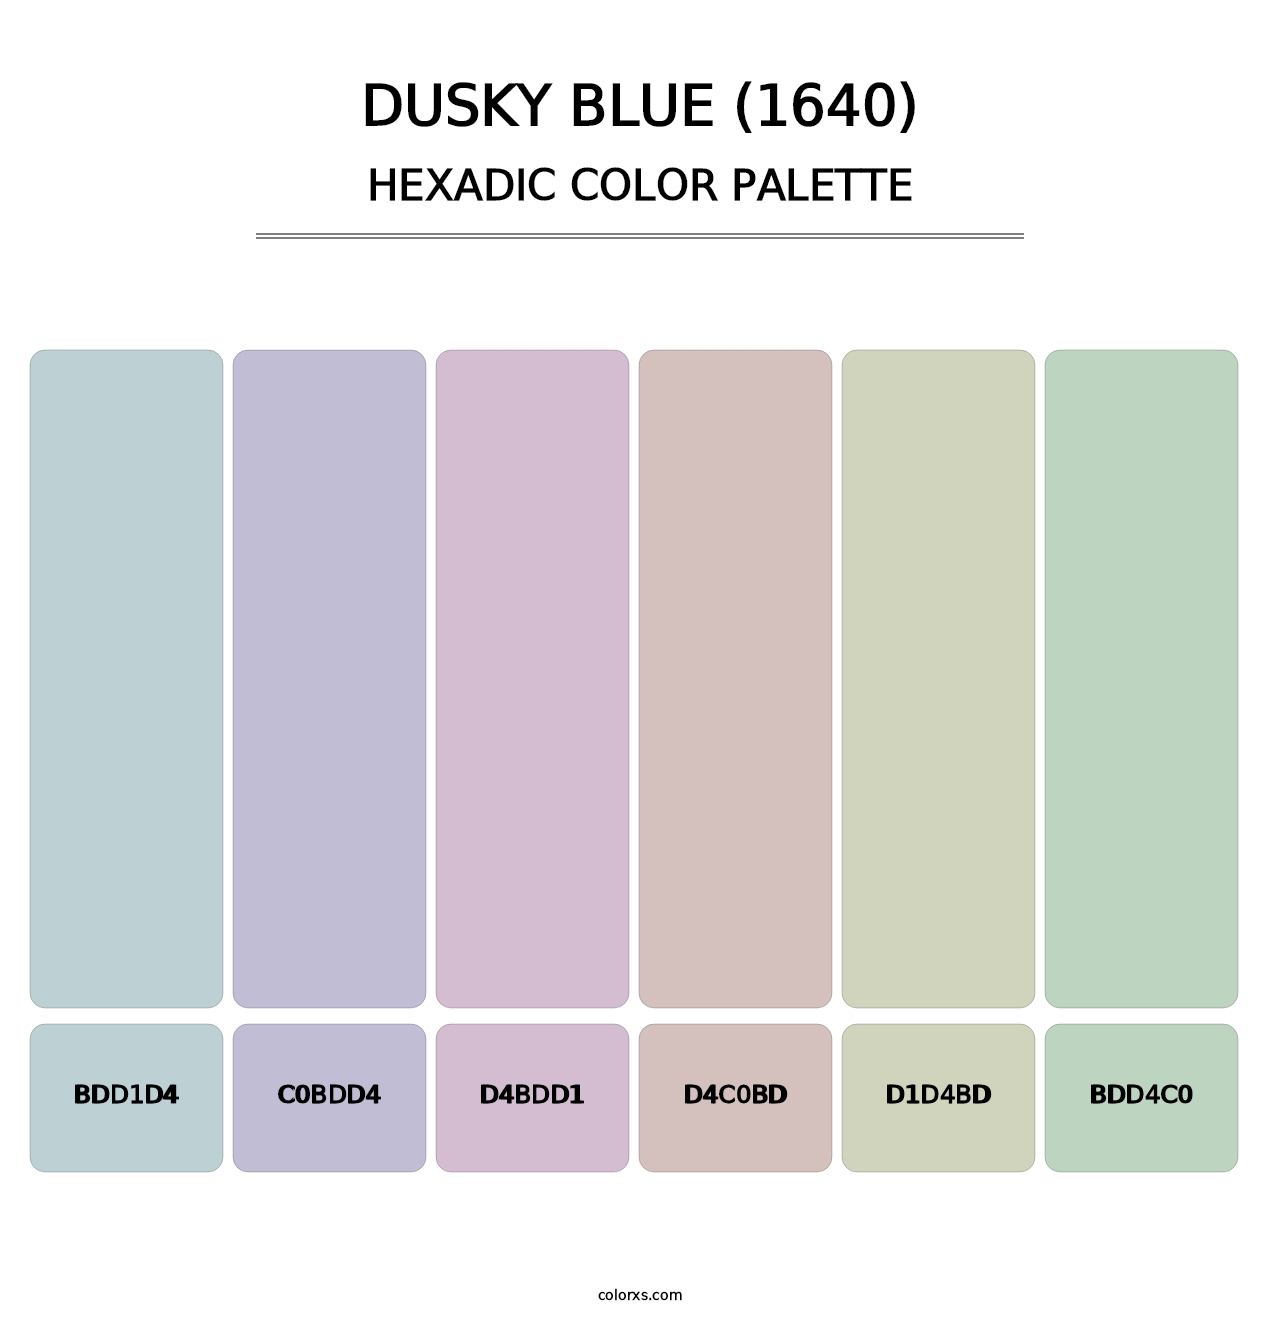 Dusky Blue (1640) - Hexadic Color Palette